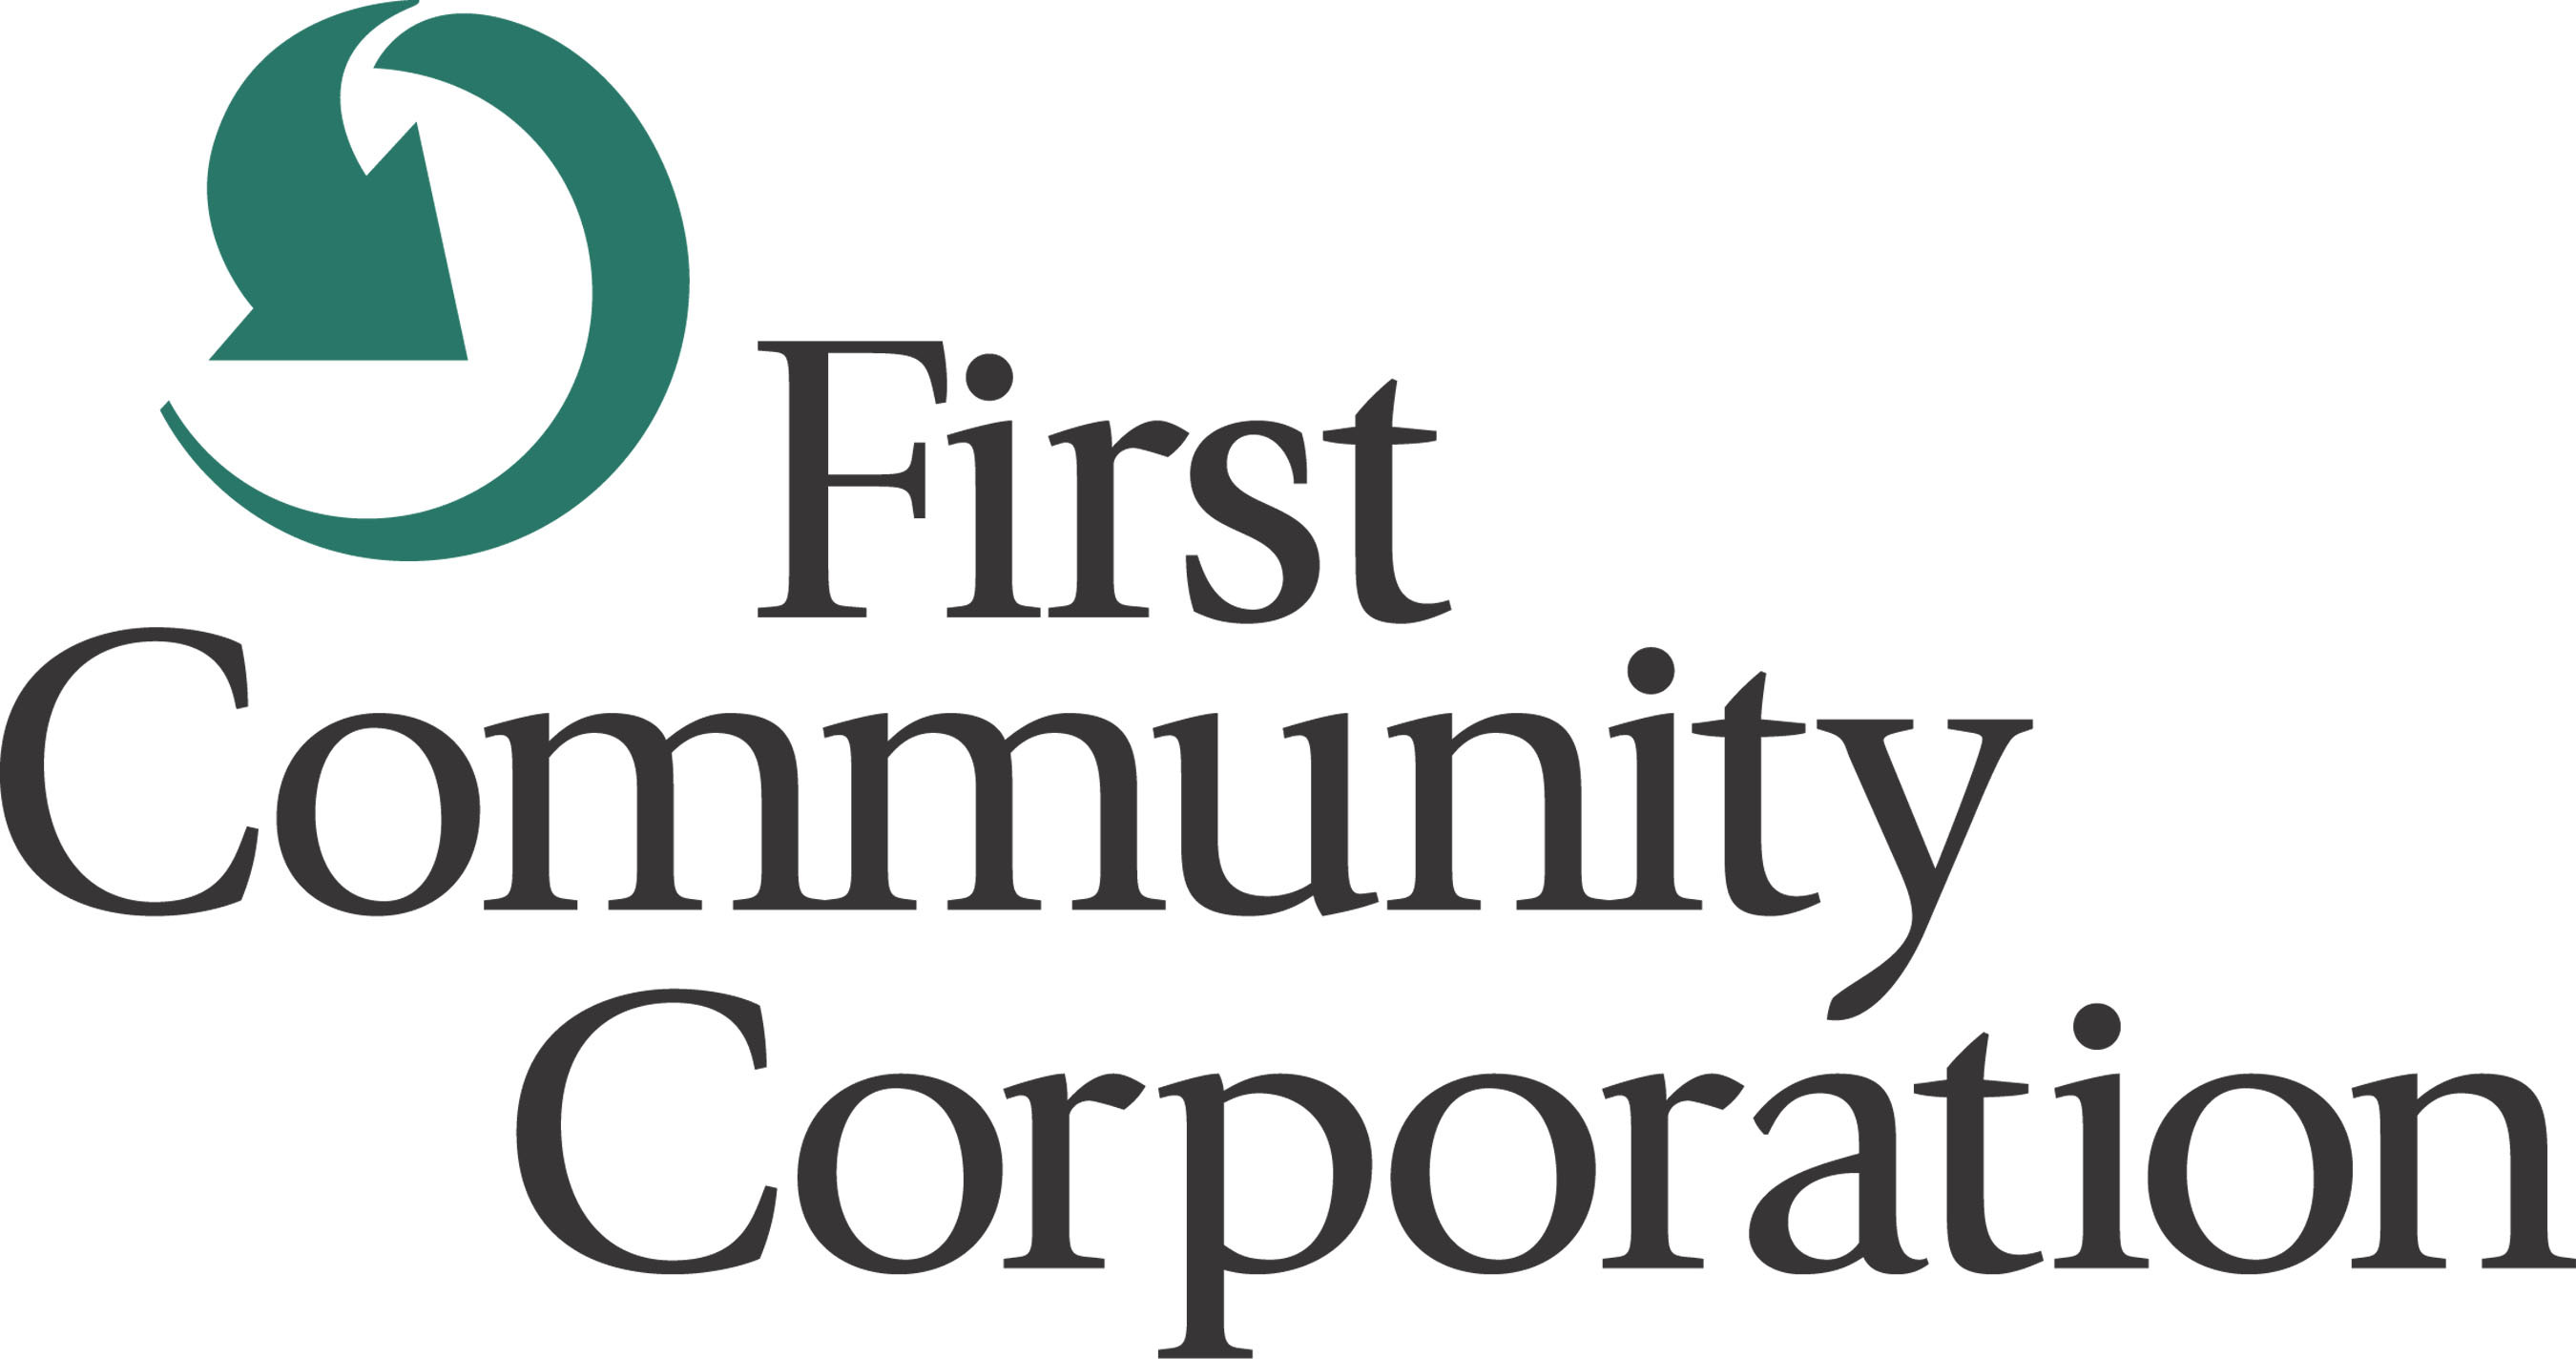 First Community Corporation logo. (PRNewsFoto/First Community Corporation) (PRNewsFoto/)